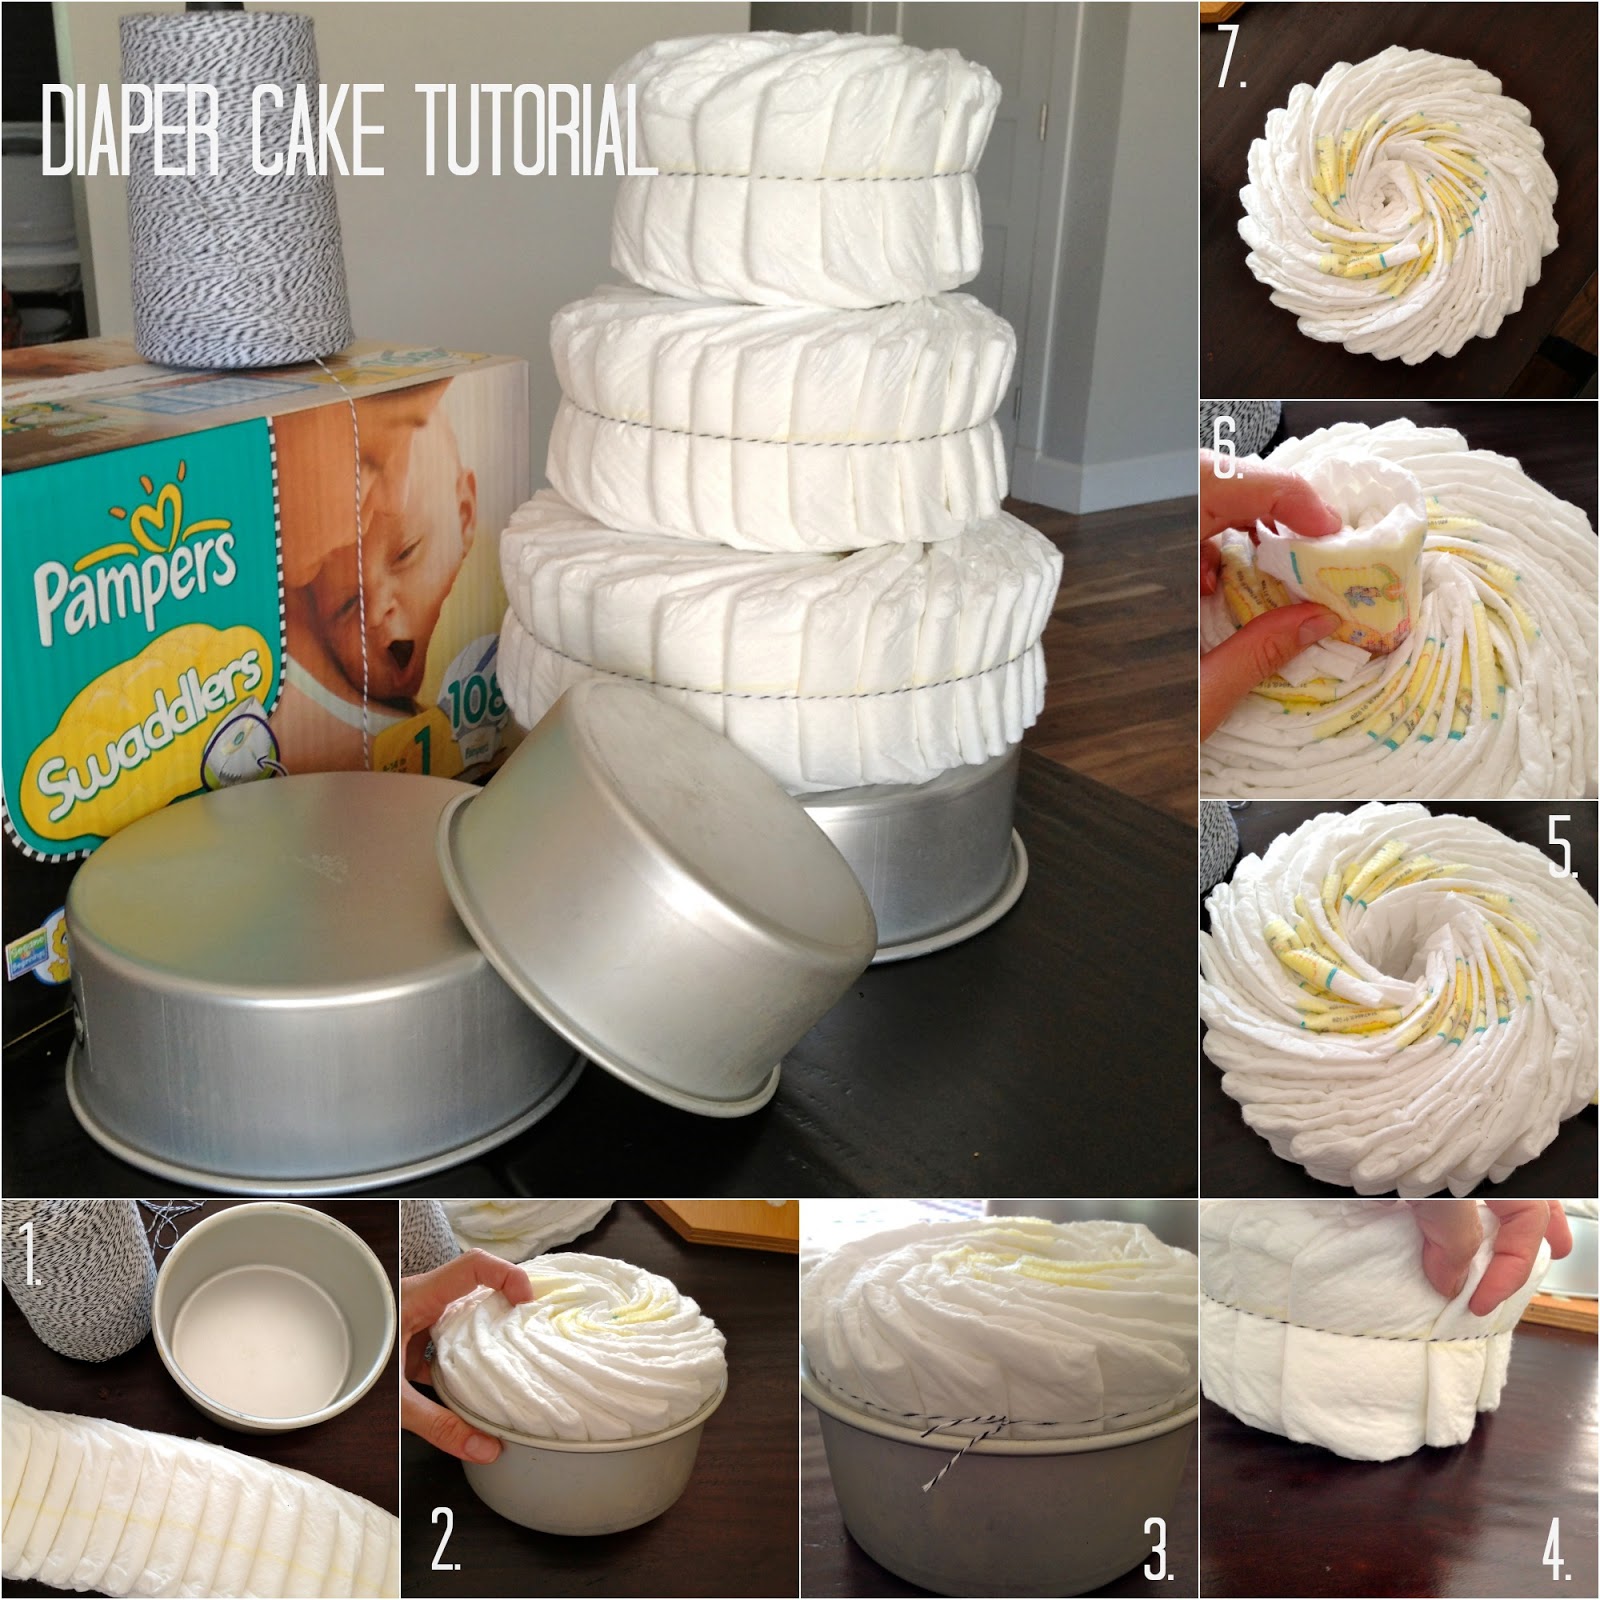 How to Make a Diaper Cake: A Complete Tutorial